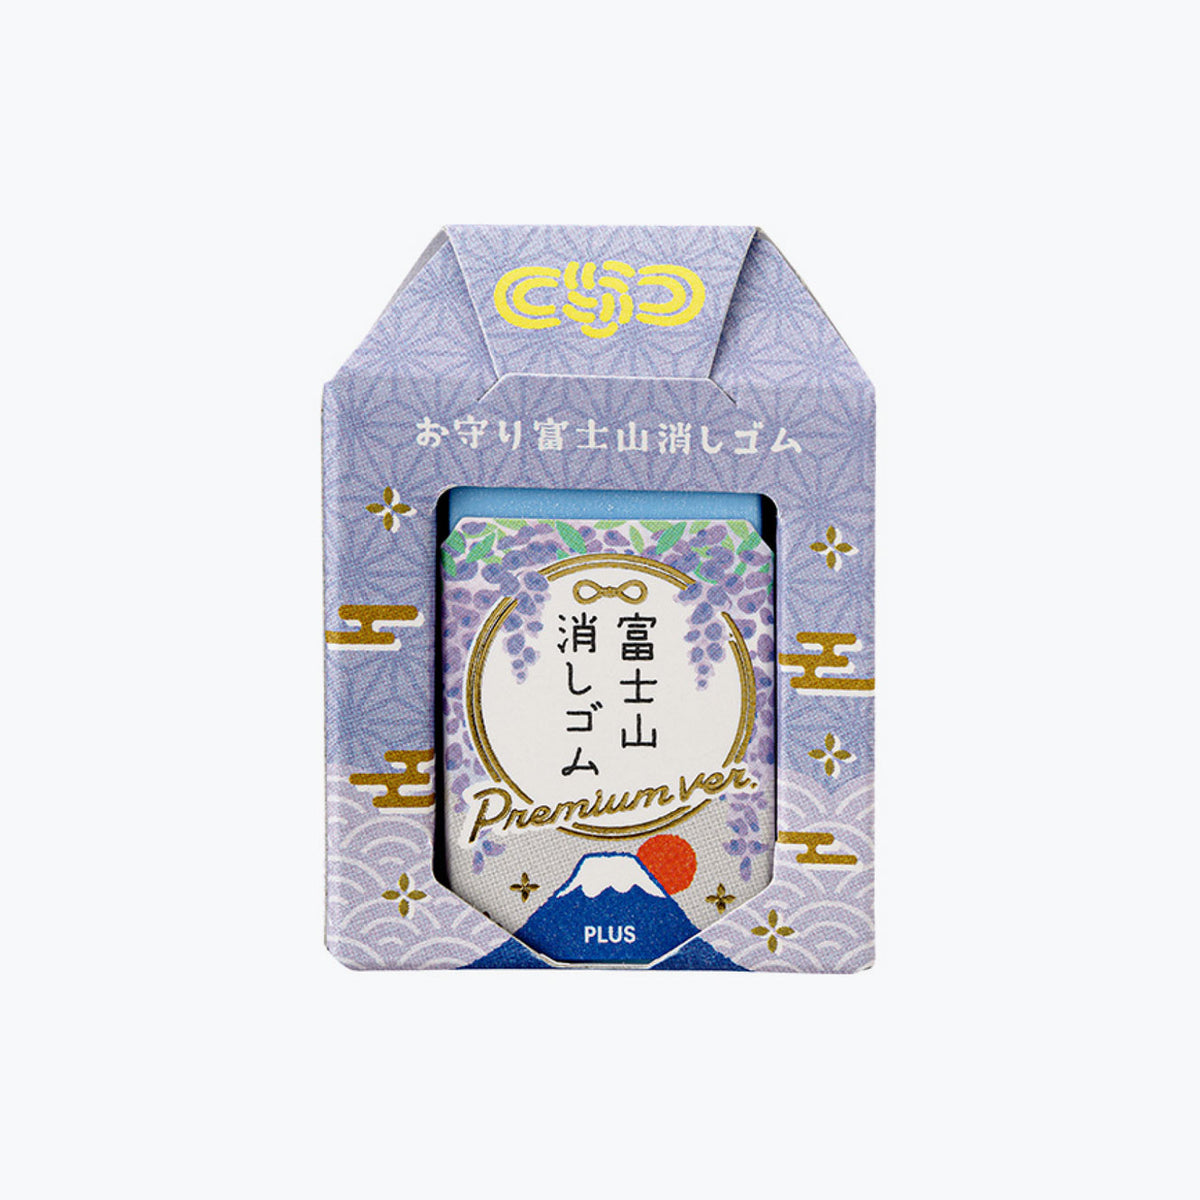 Plus - Eraser - Air-In - Mt. Fuji - Amulet - Fuji